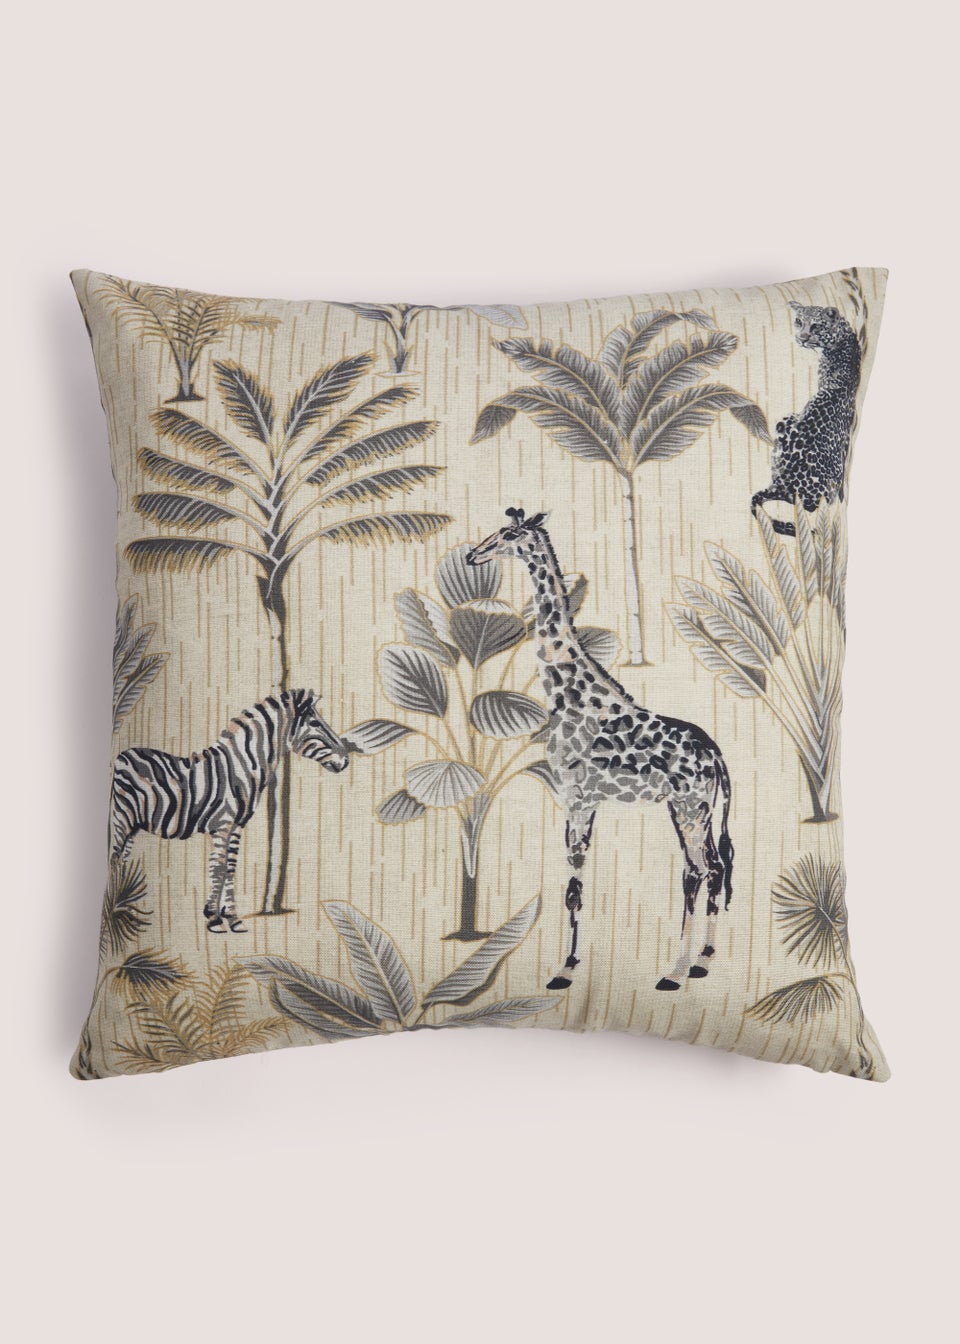 Monochrome Jungle Animal Print Cushion (43cm x 43cm)